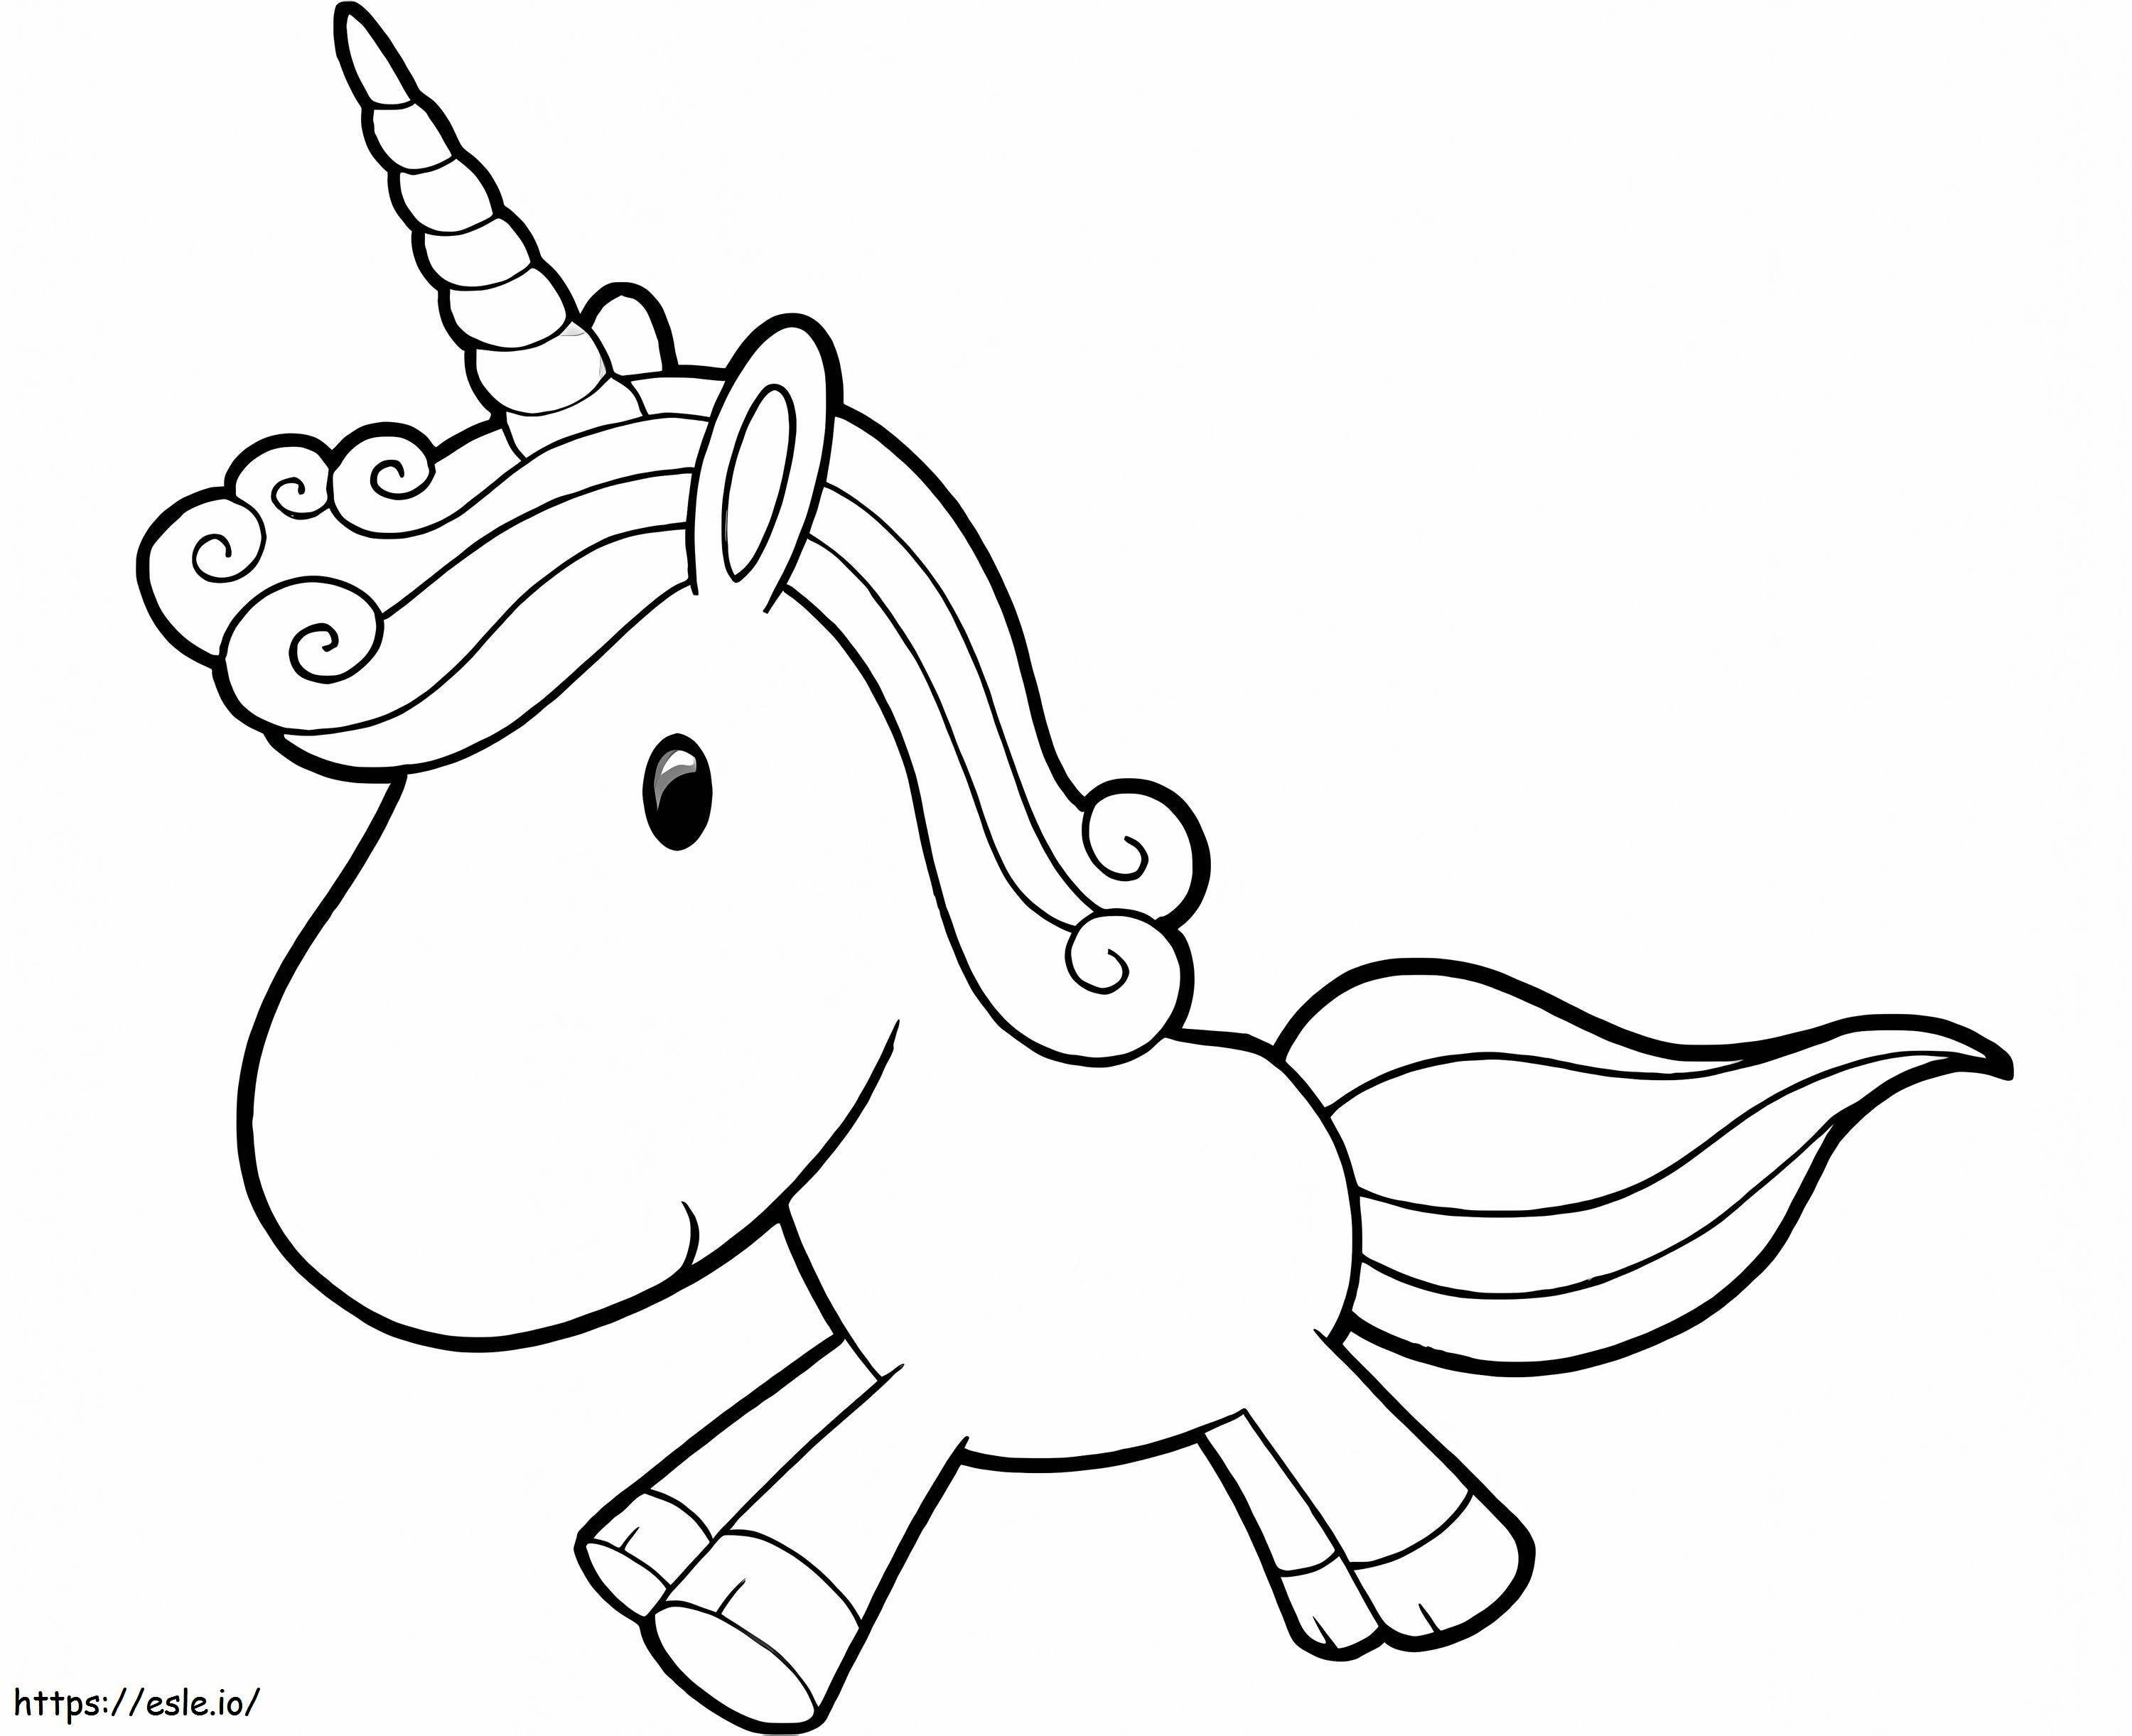 1563584357 Chibi Unicorn A4 1 coloring page